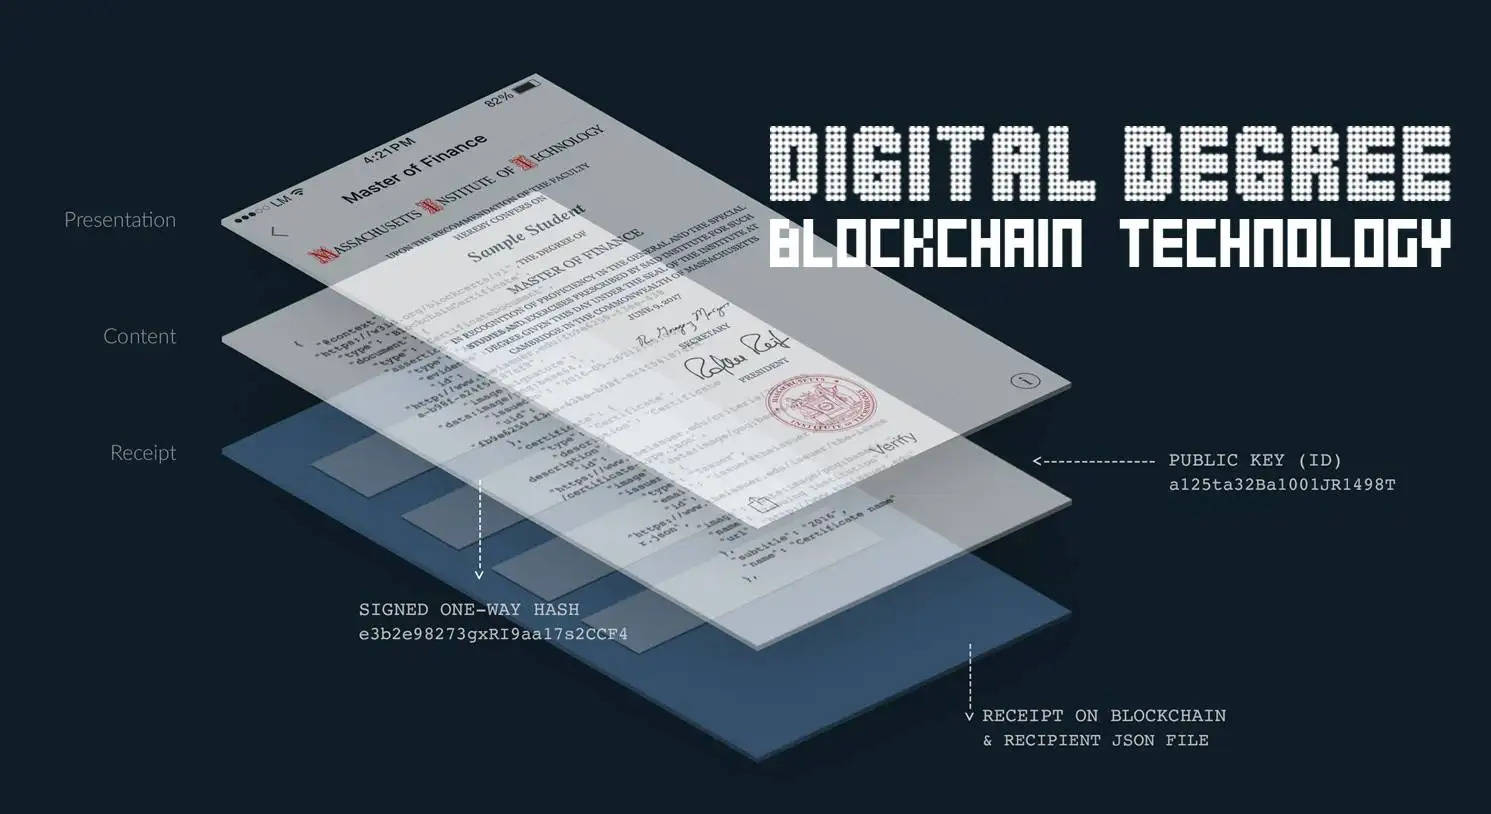 digital degree blockchain technology narendra modi iit kanpur 54 convocation